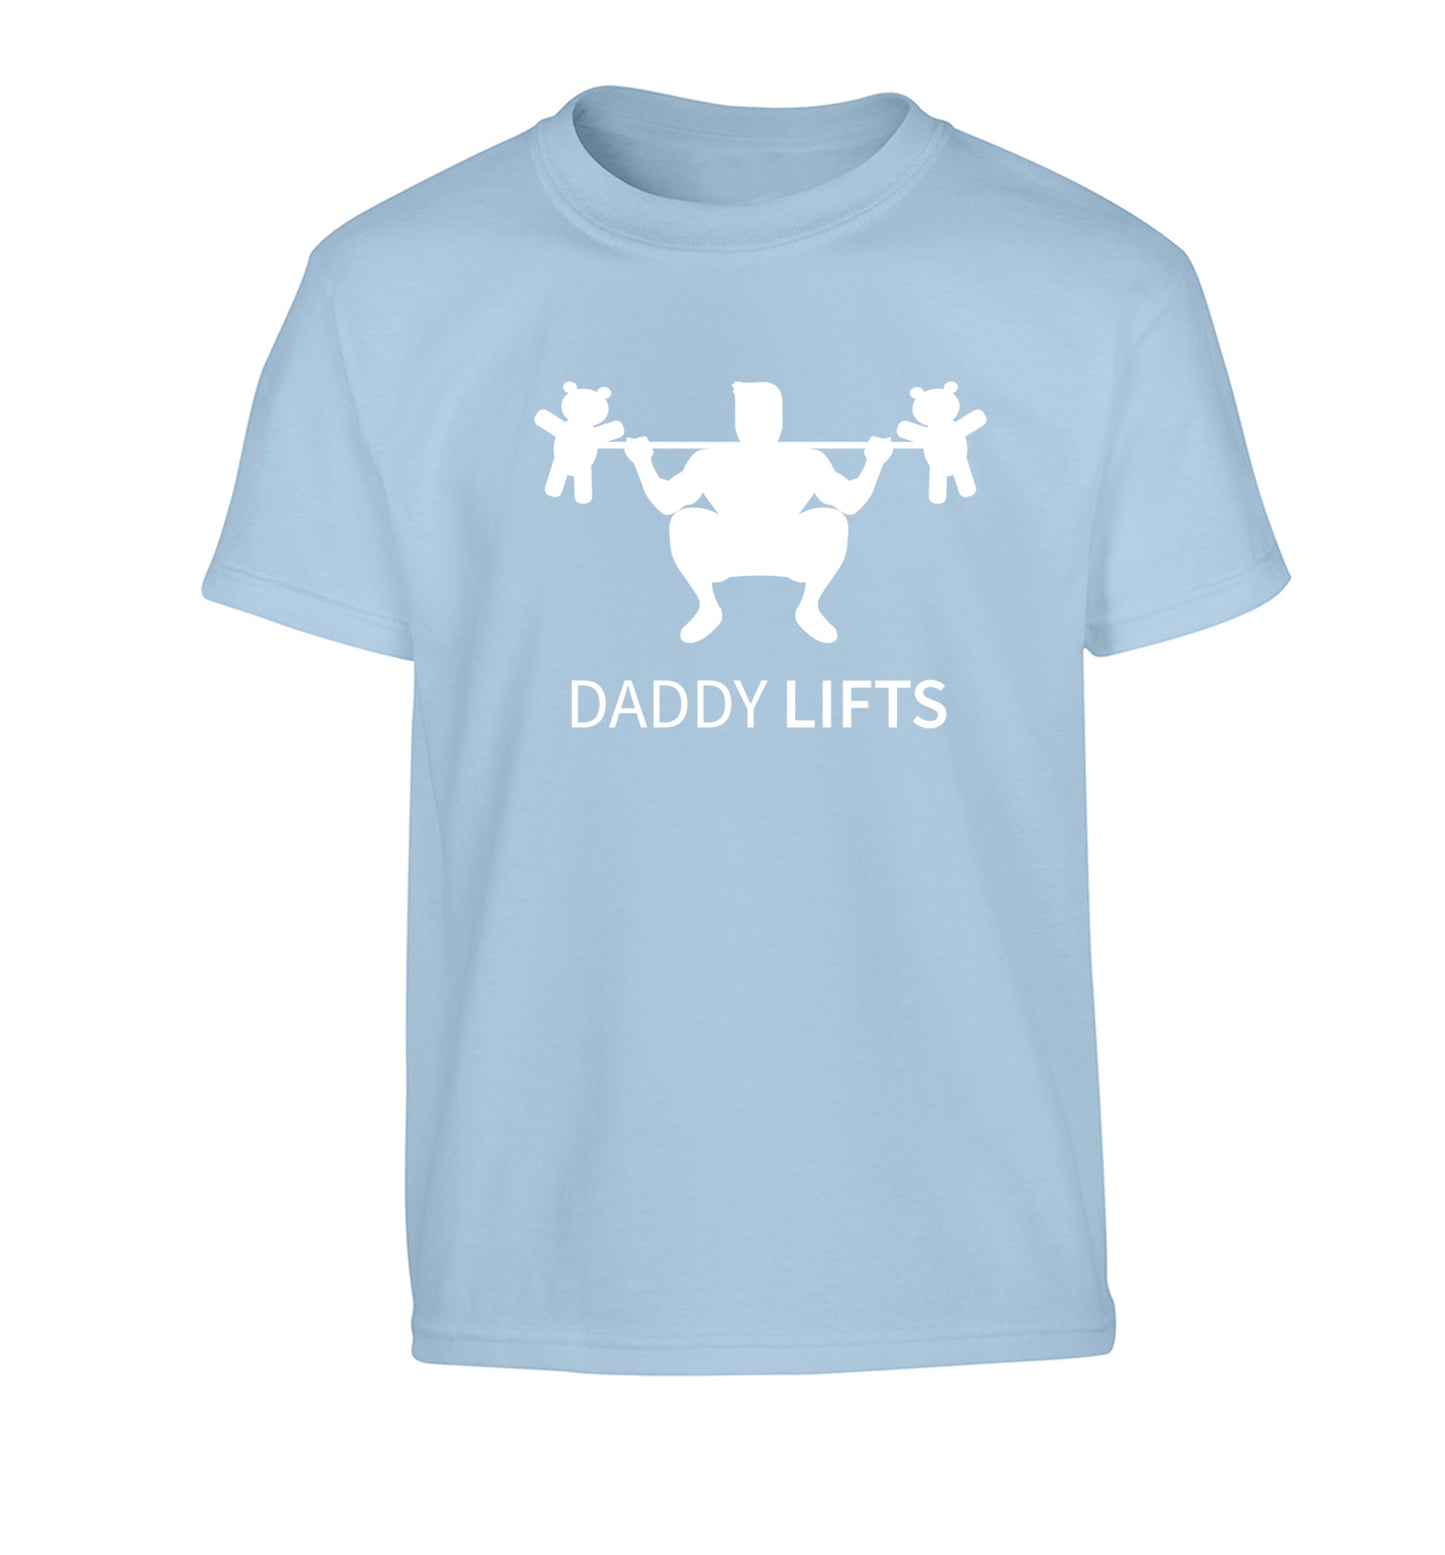 Daddy lifts Children's light blue Tshirt 12-13 Years